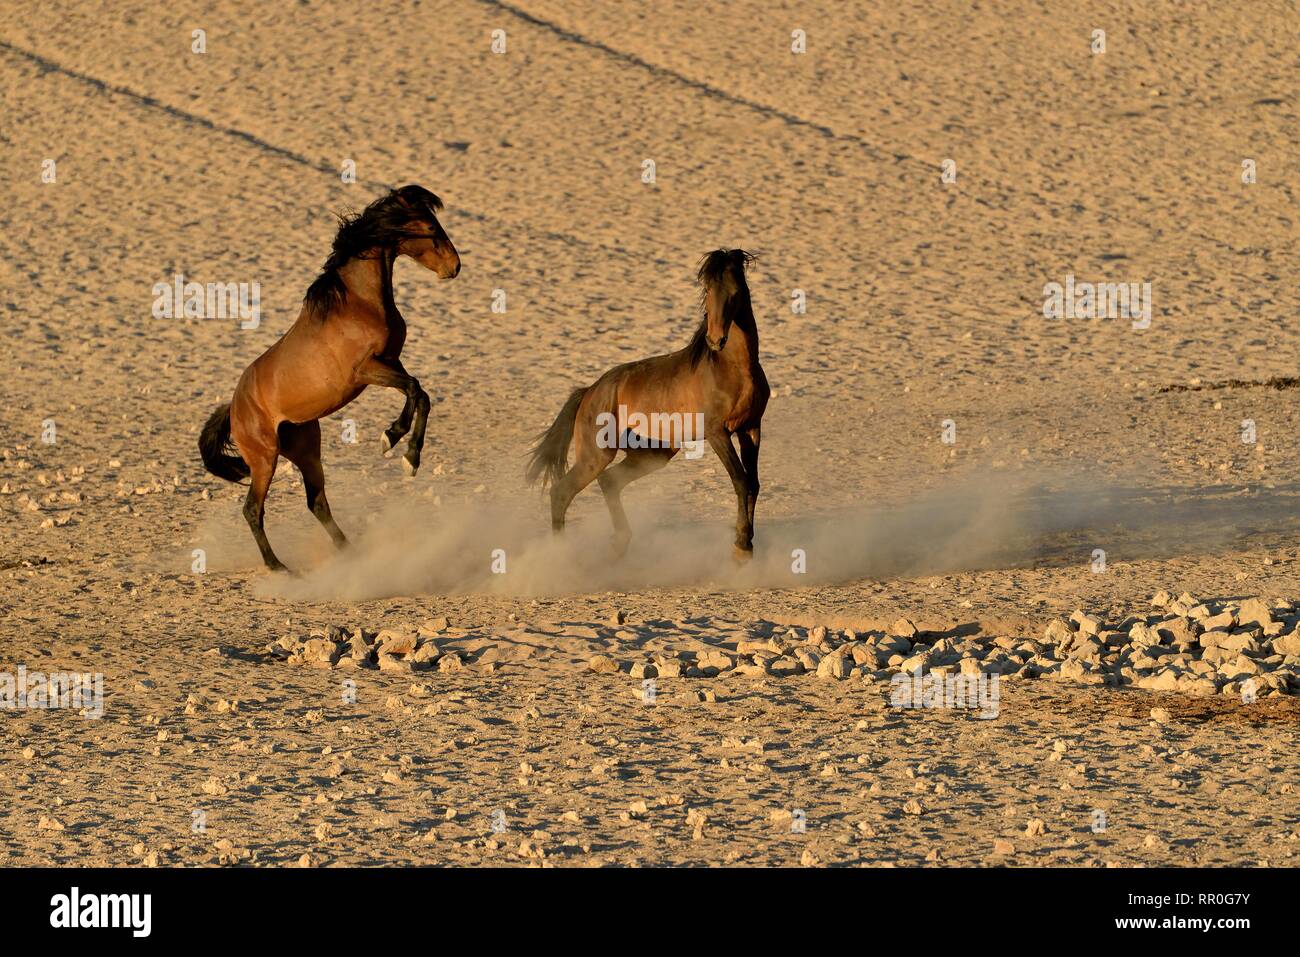 Zoologie, Säugetiere (Mammalia), Kampf gegen die Wüste Namib, Namibia oder Namib Wildpferd (Equus ferus) ne, Additional-Rights - Clearance-Info - Not-Available Stockfoto